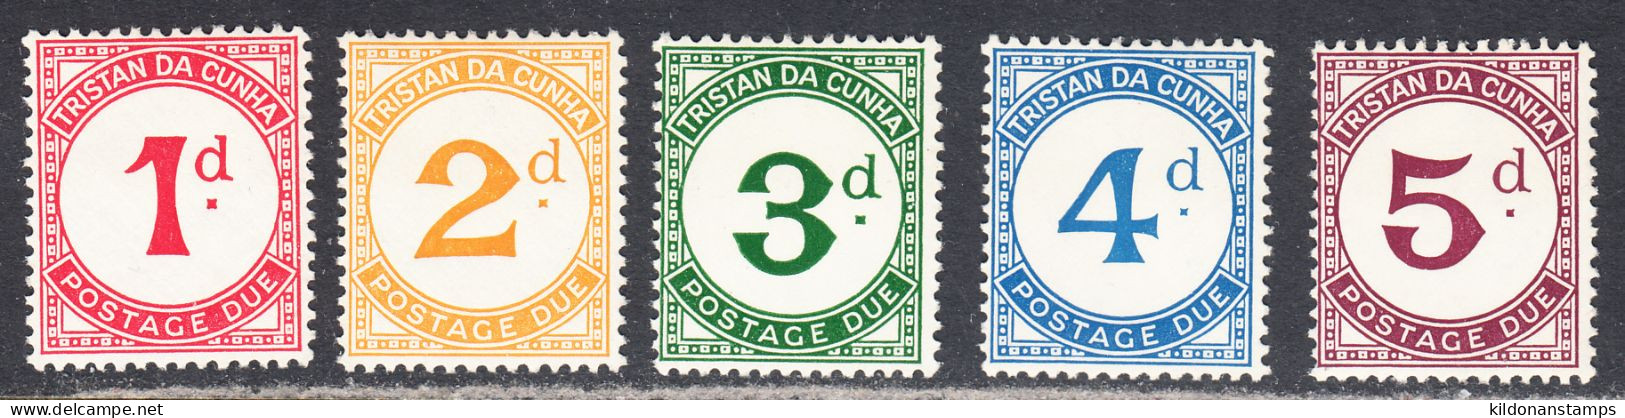 Tristan Da Cunha 1957 Postage Due, Mint No Hinge, Block, Sc# J1-J5, SG D1-D5 - Tristan Da Cunha